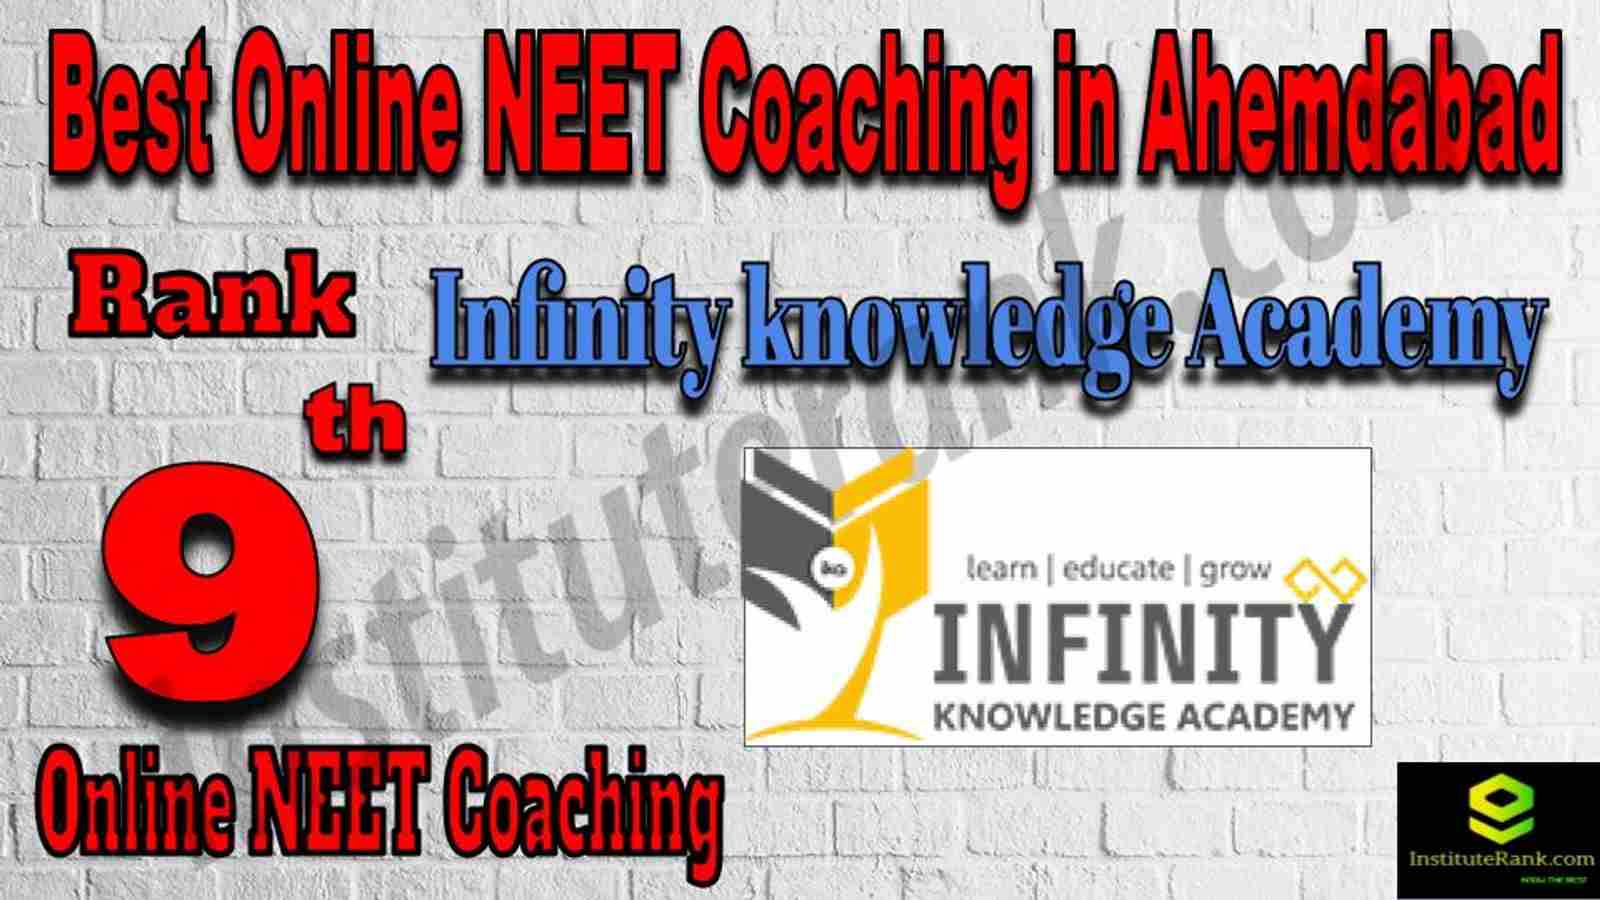 Rank 9 Best Online NEET Coaching in Ahmedabad